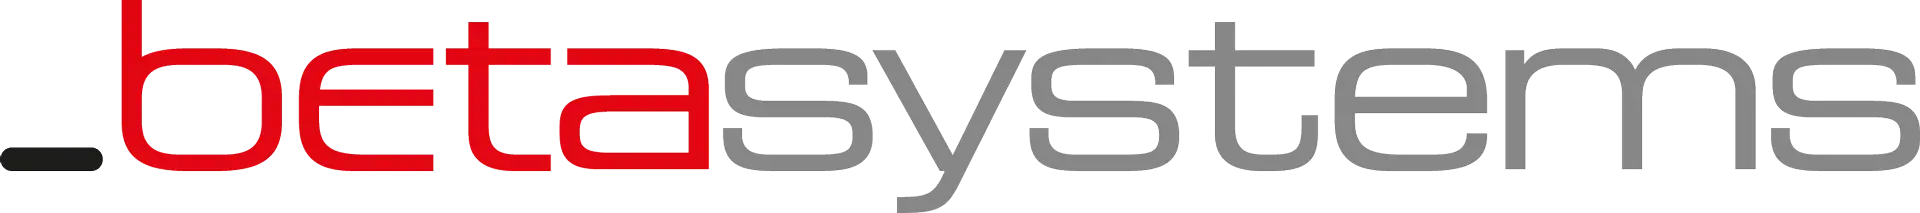 betasystems-logo